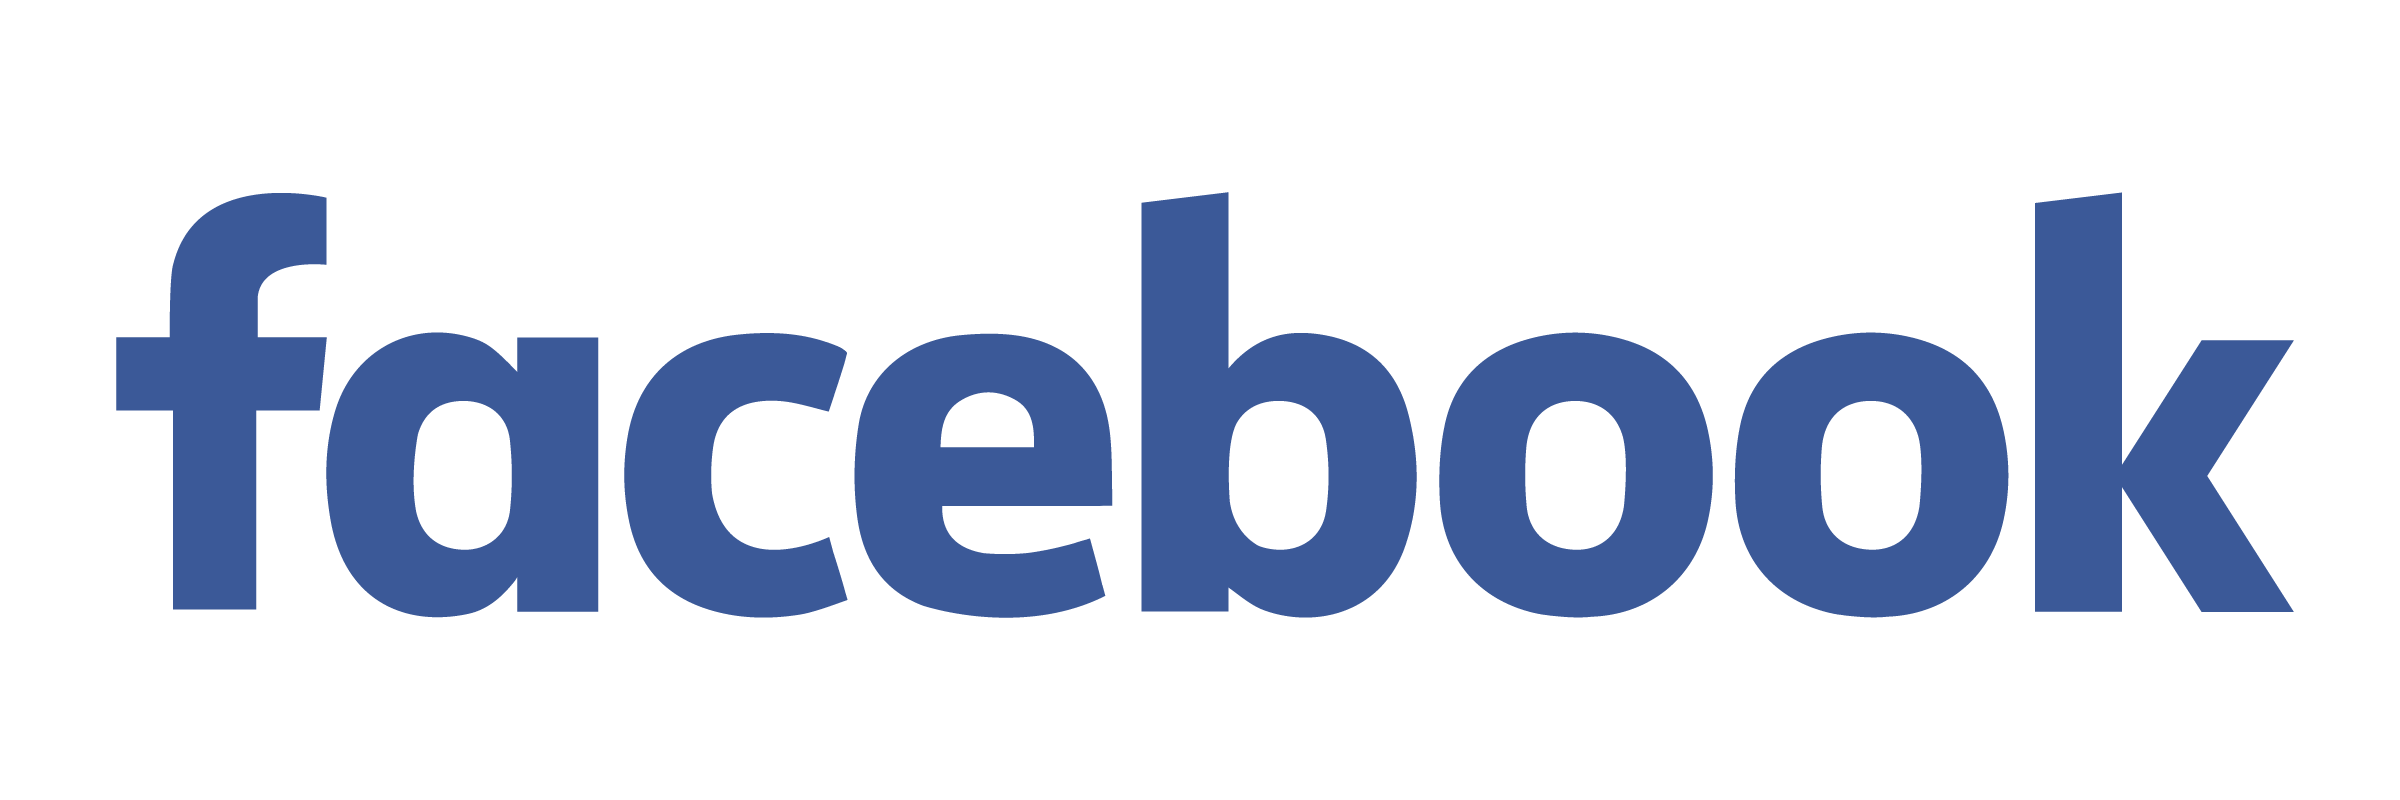 Full Logo - Facebook Logo PNG Transparent & SVG Vector - Freebie Supply